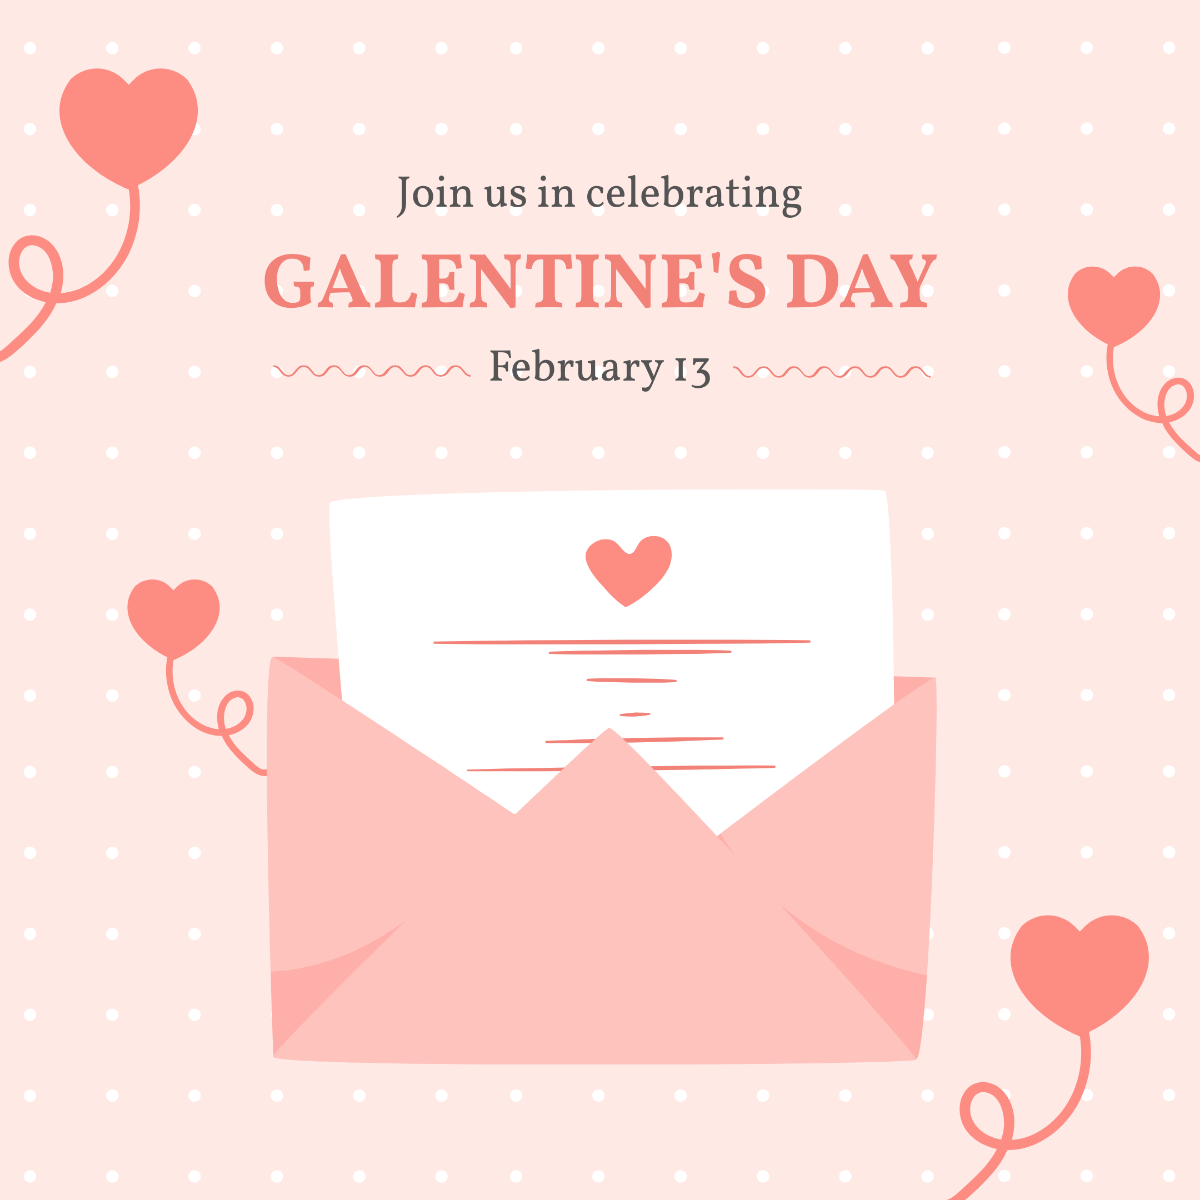 Free Galentine's Day Invitation Instagram Post Template